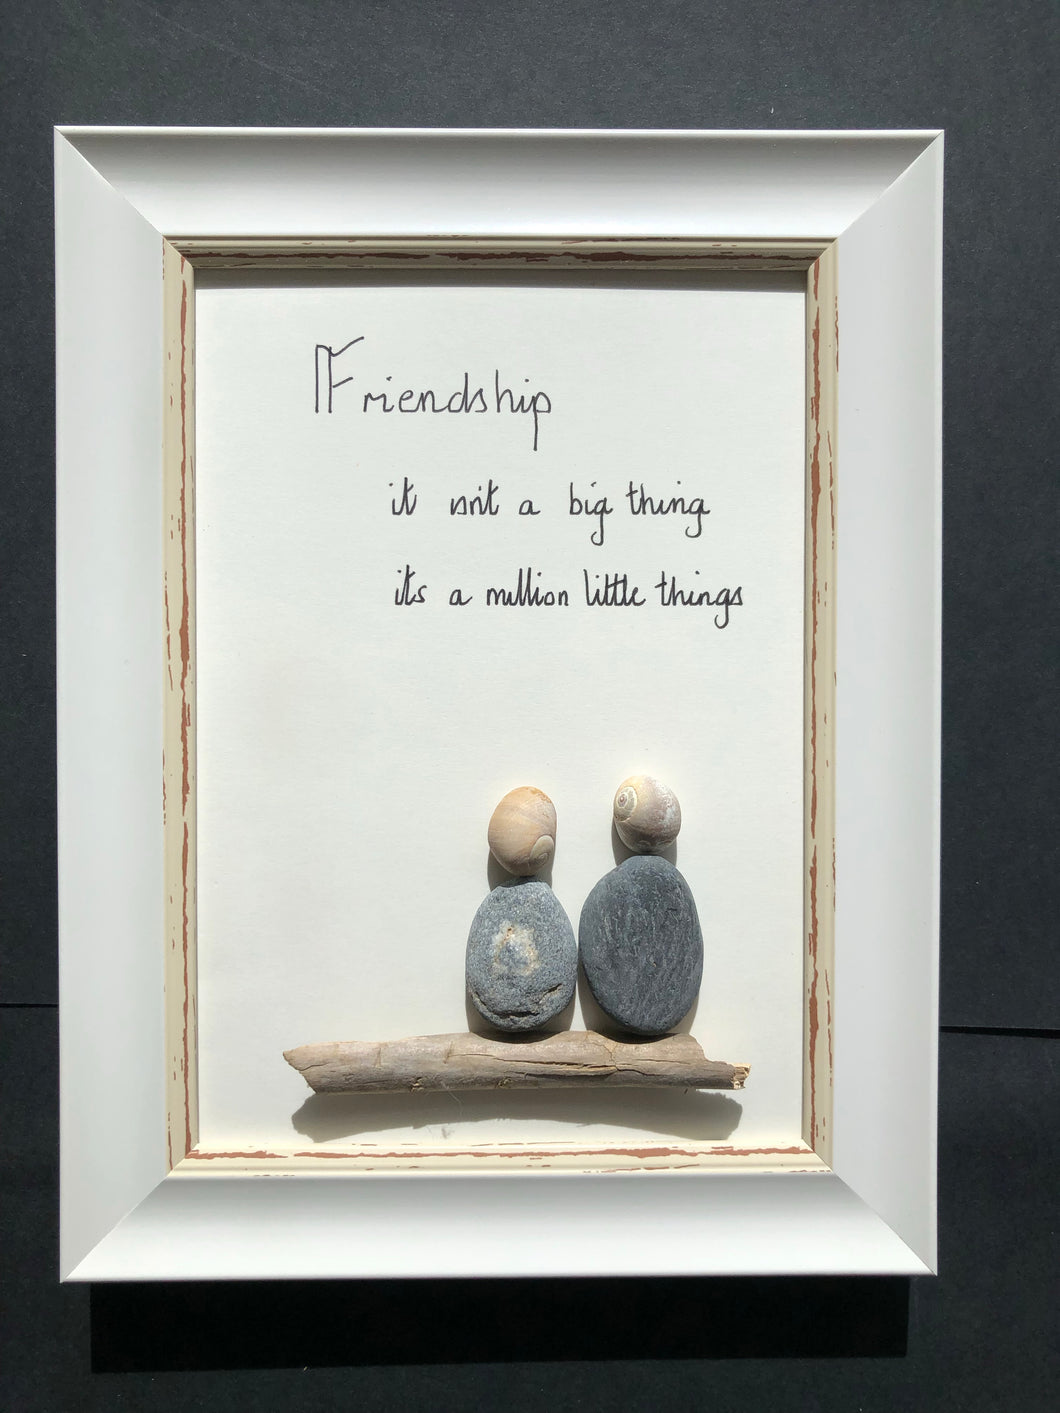 Friendship (little things)